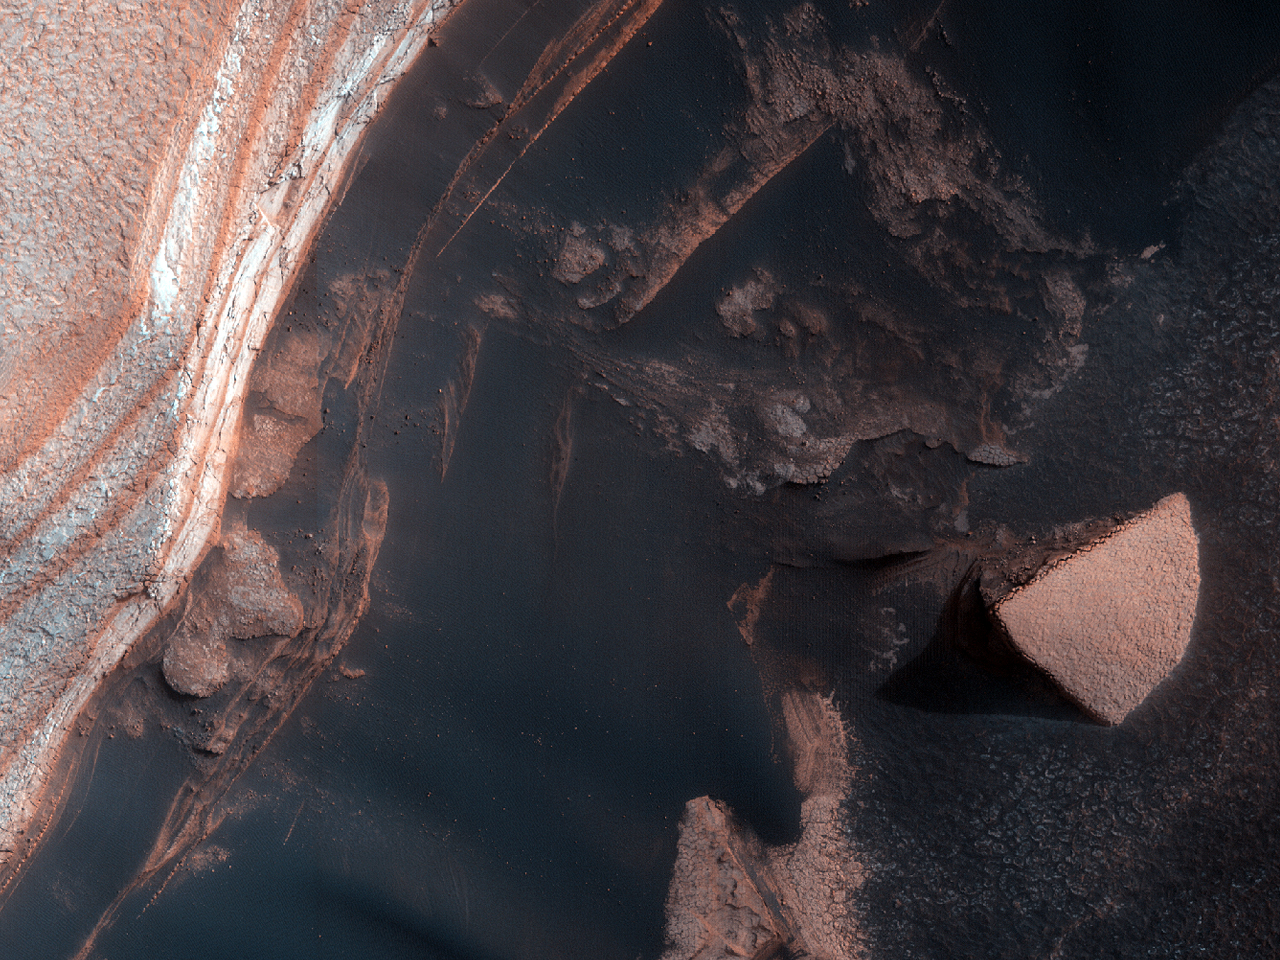 Skarpa w kanionie Chasma Boreale